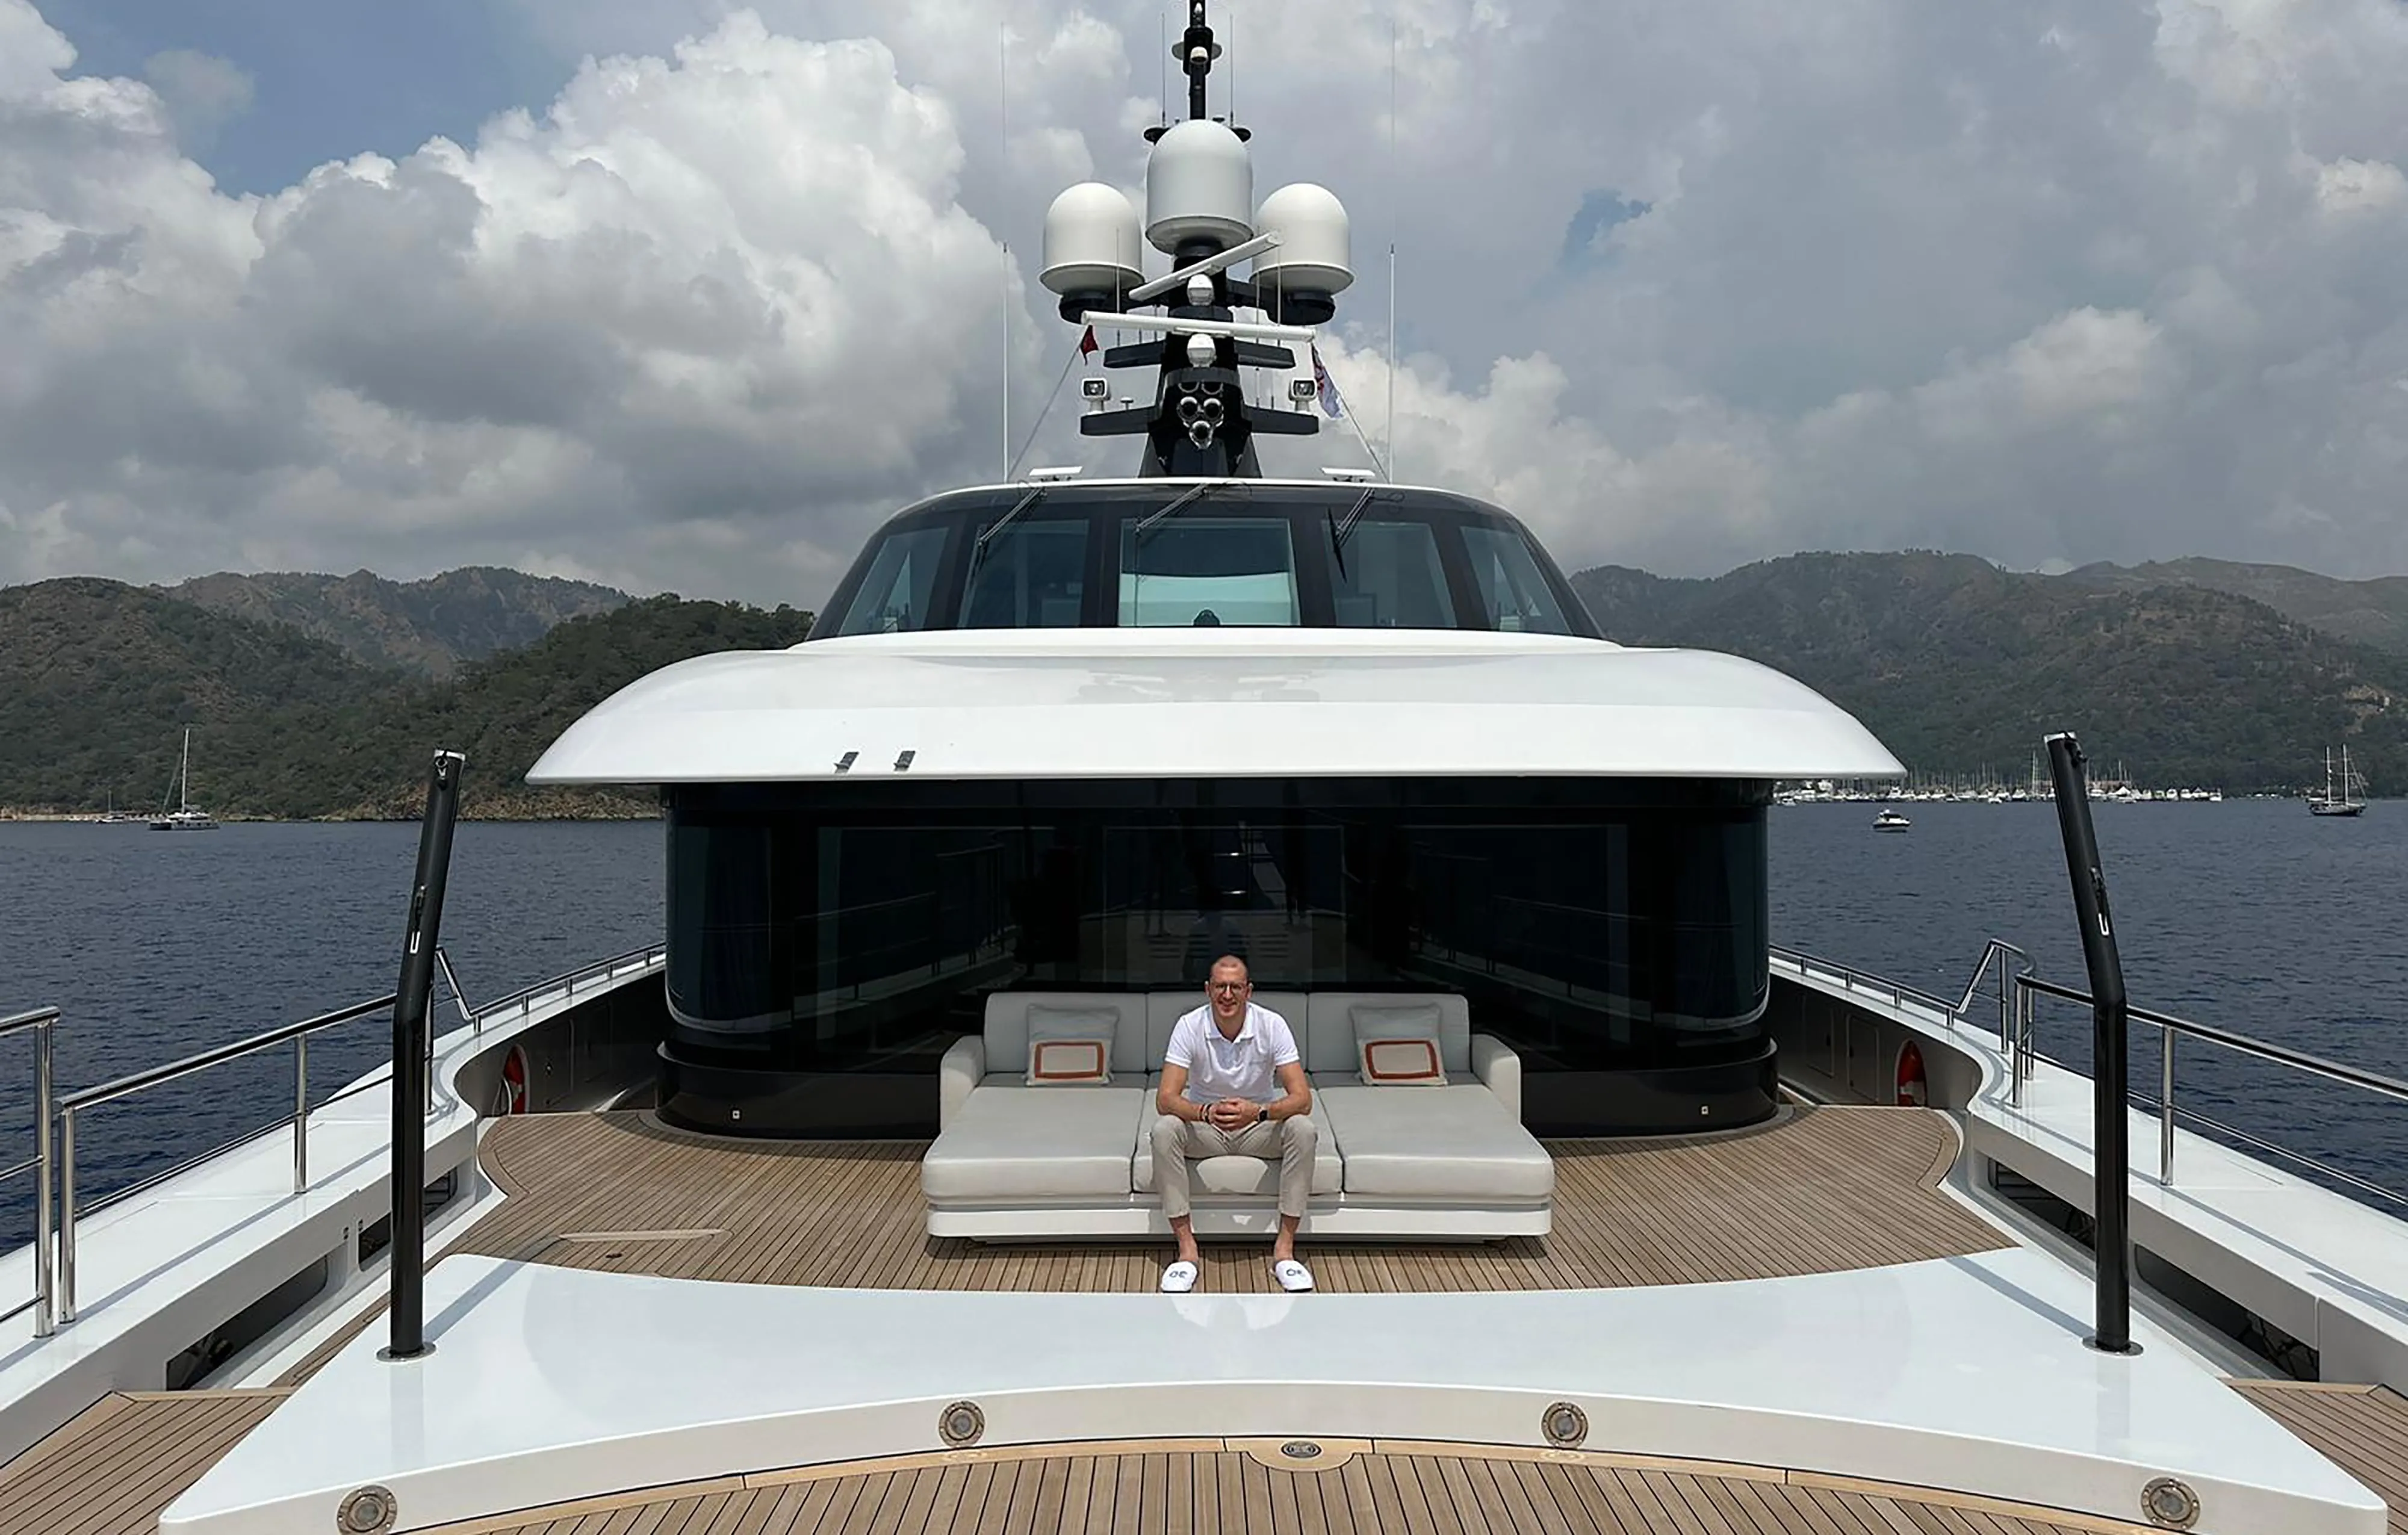 Goolets' Luka Mihelič on Crafting Bespoke Yacht Charter Experiences